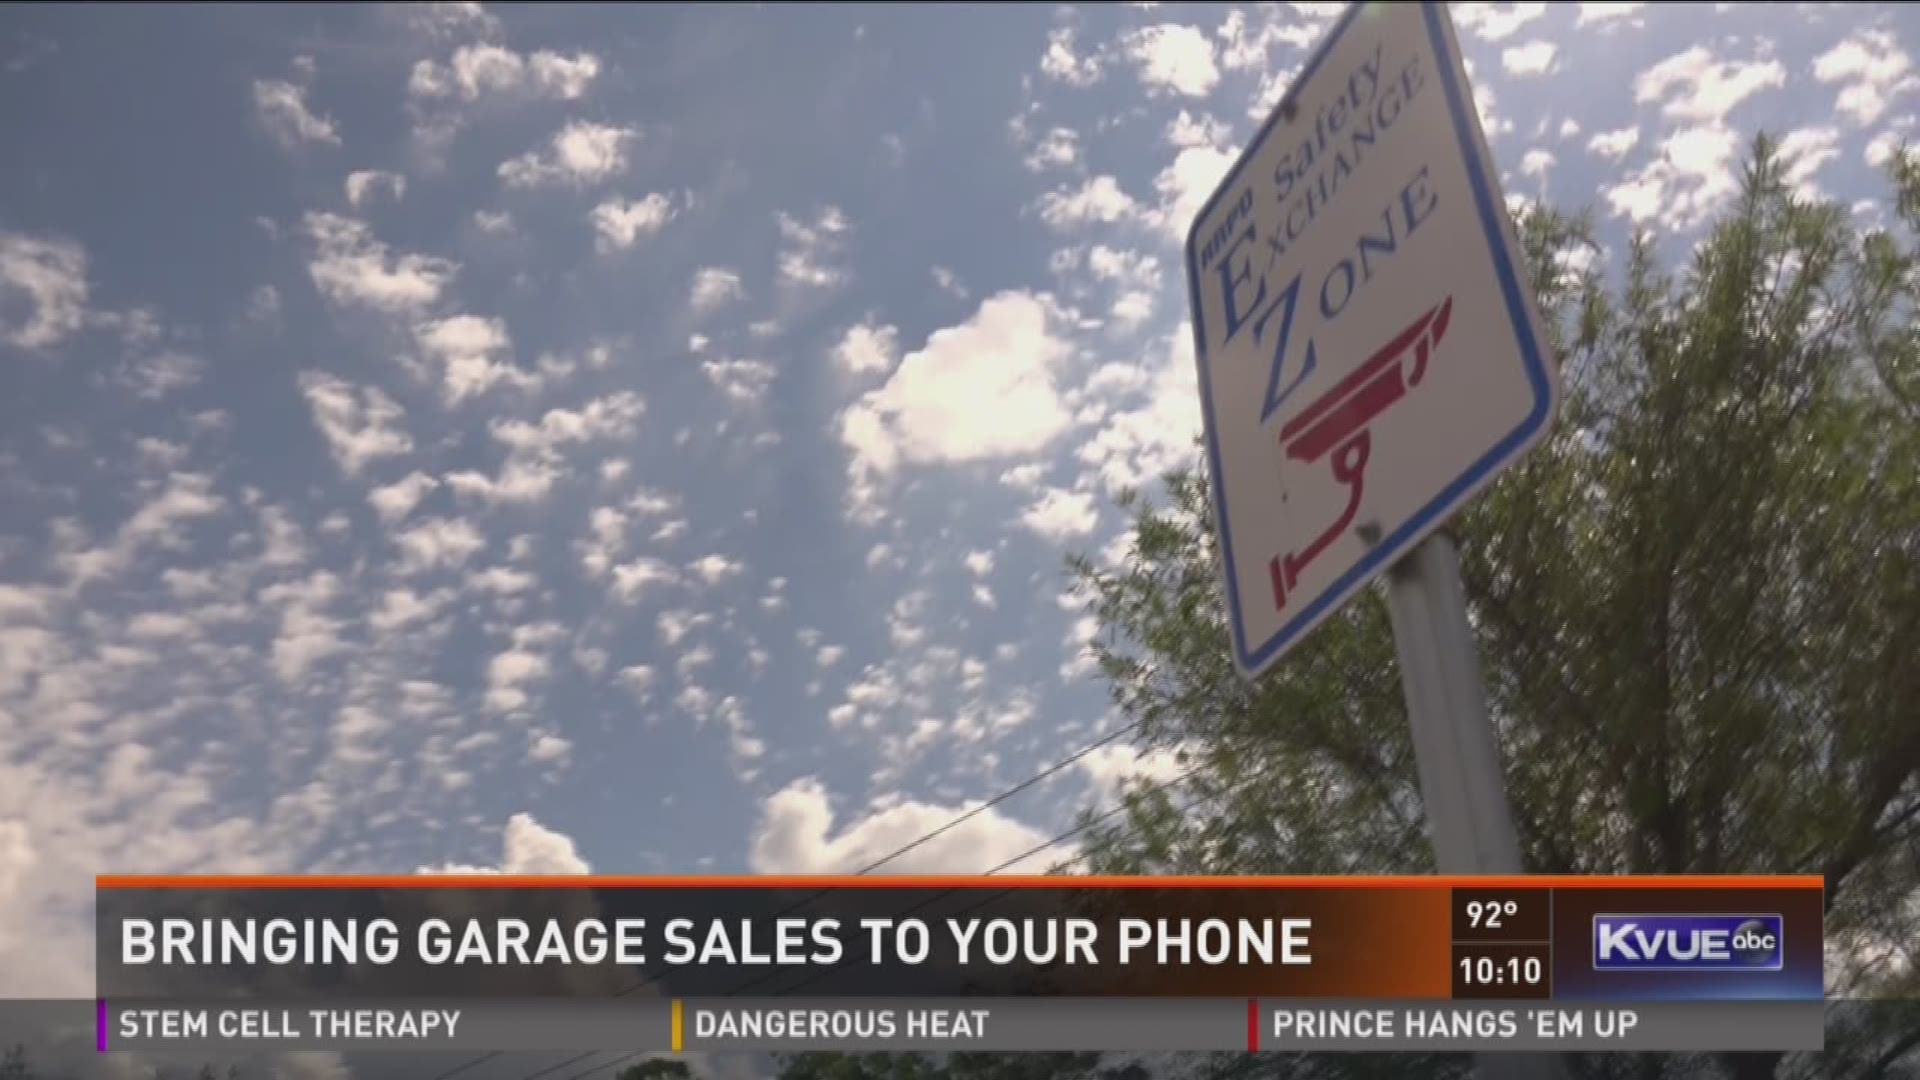 Bringing garage sales to your phone